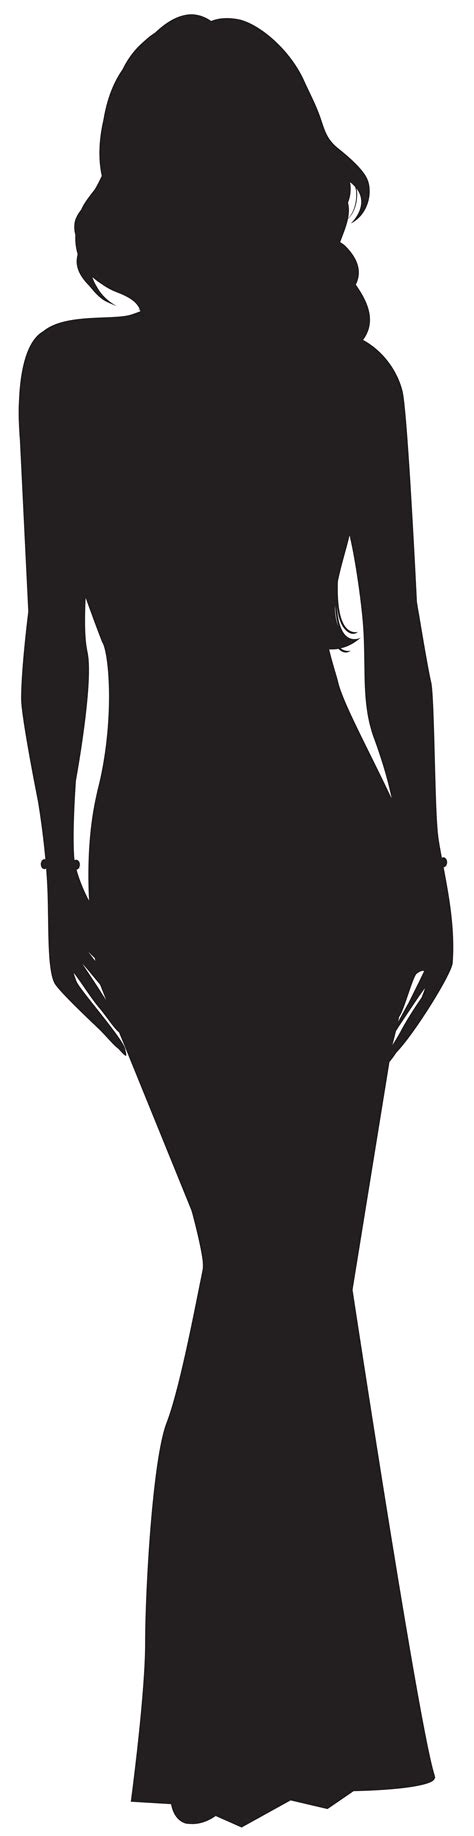 Woman Silhouette Clip Art Black Woman 8001789 Transprent Png Free